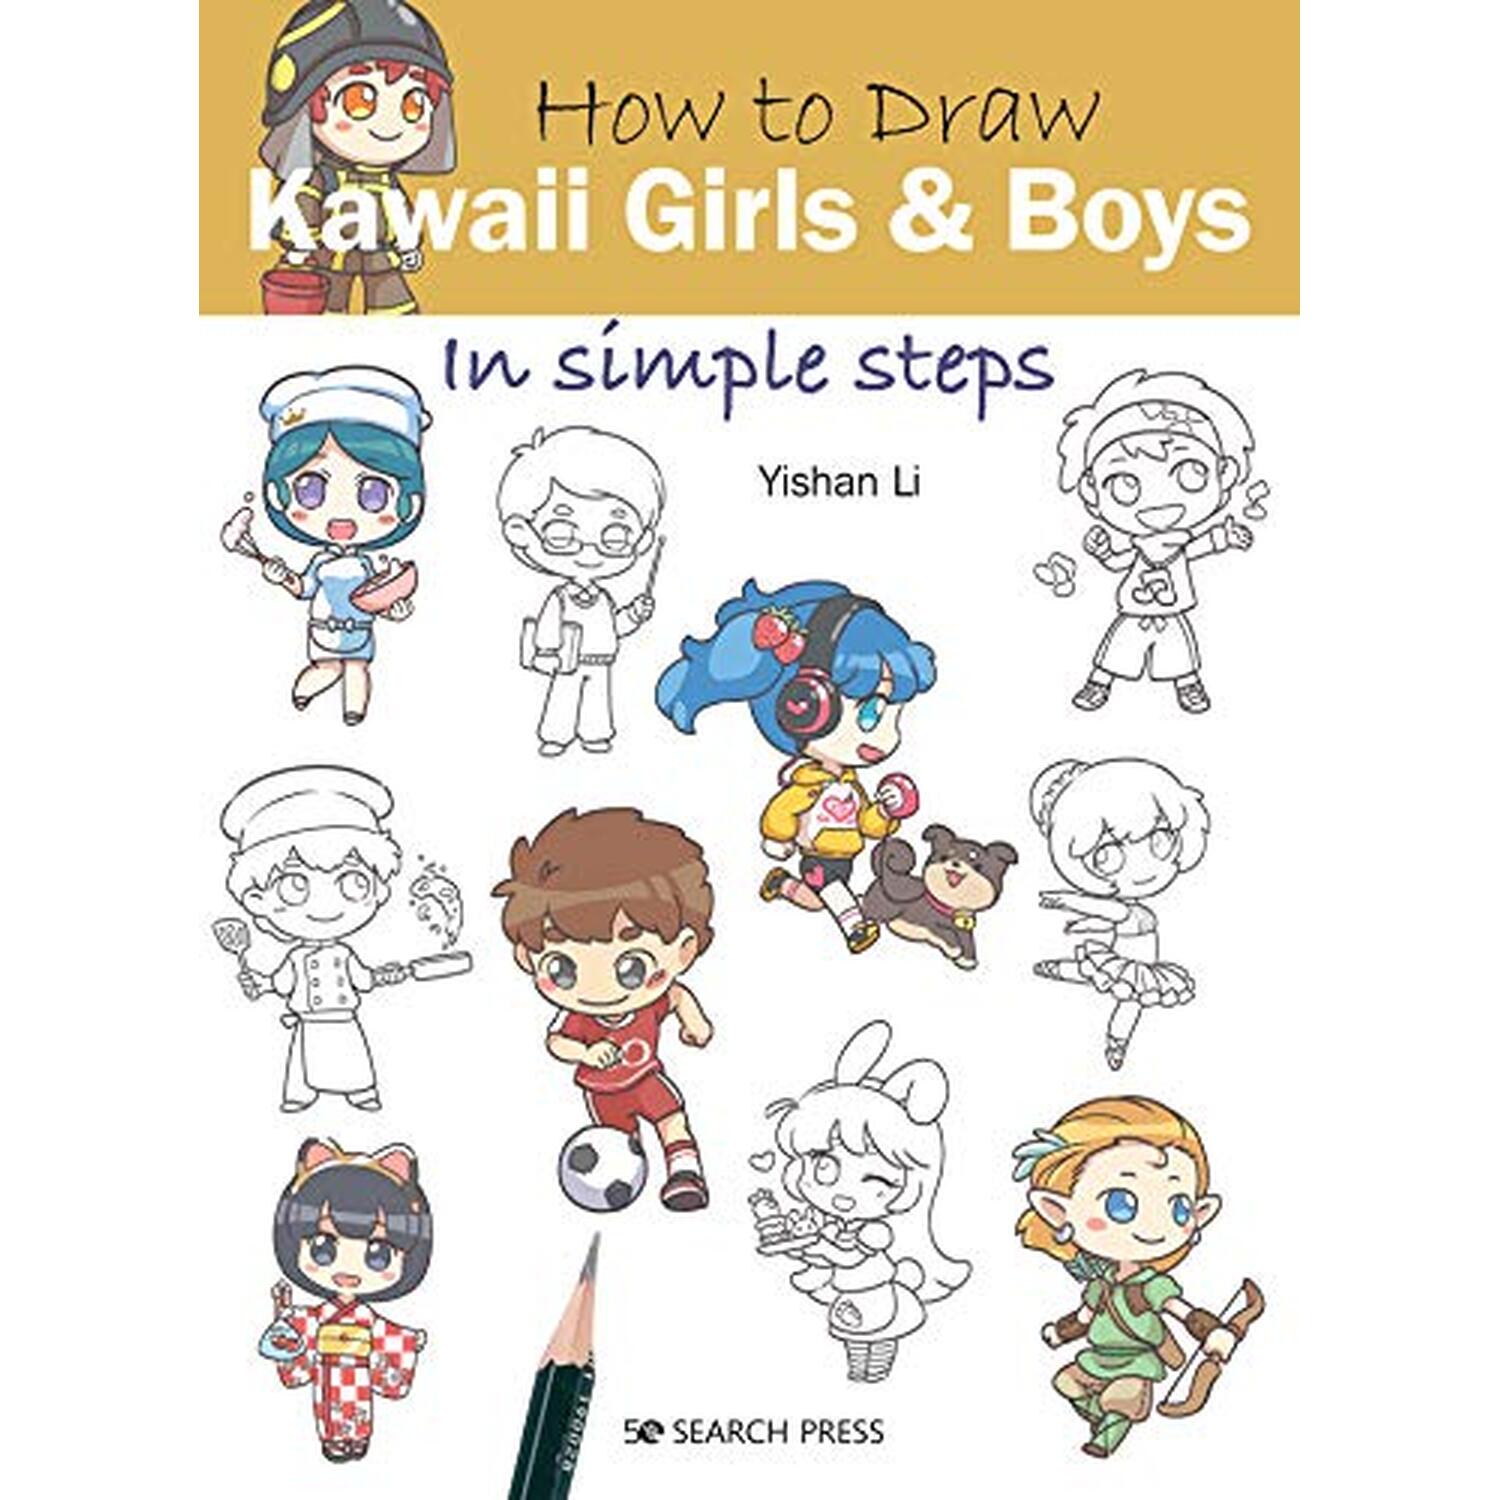 How To Draw Kawaii Girls and Boys Image 1